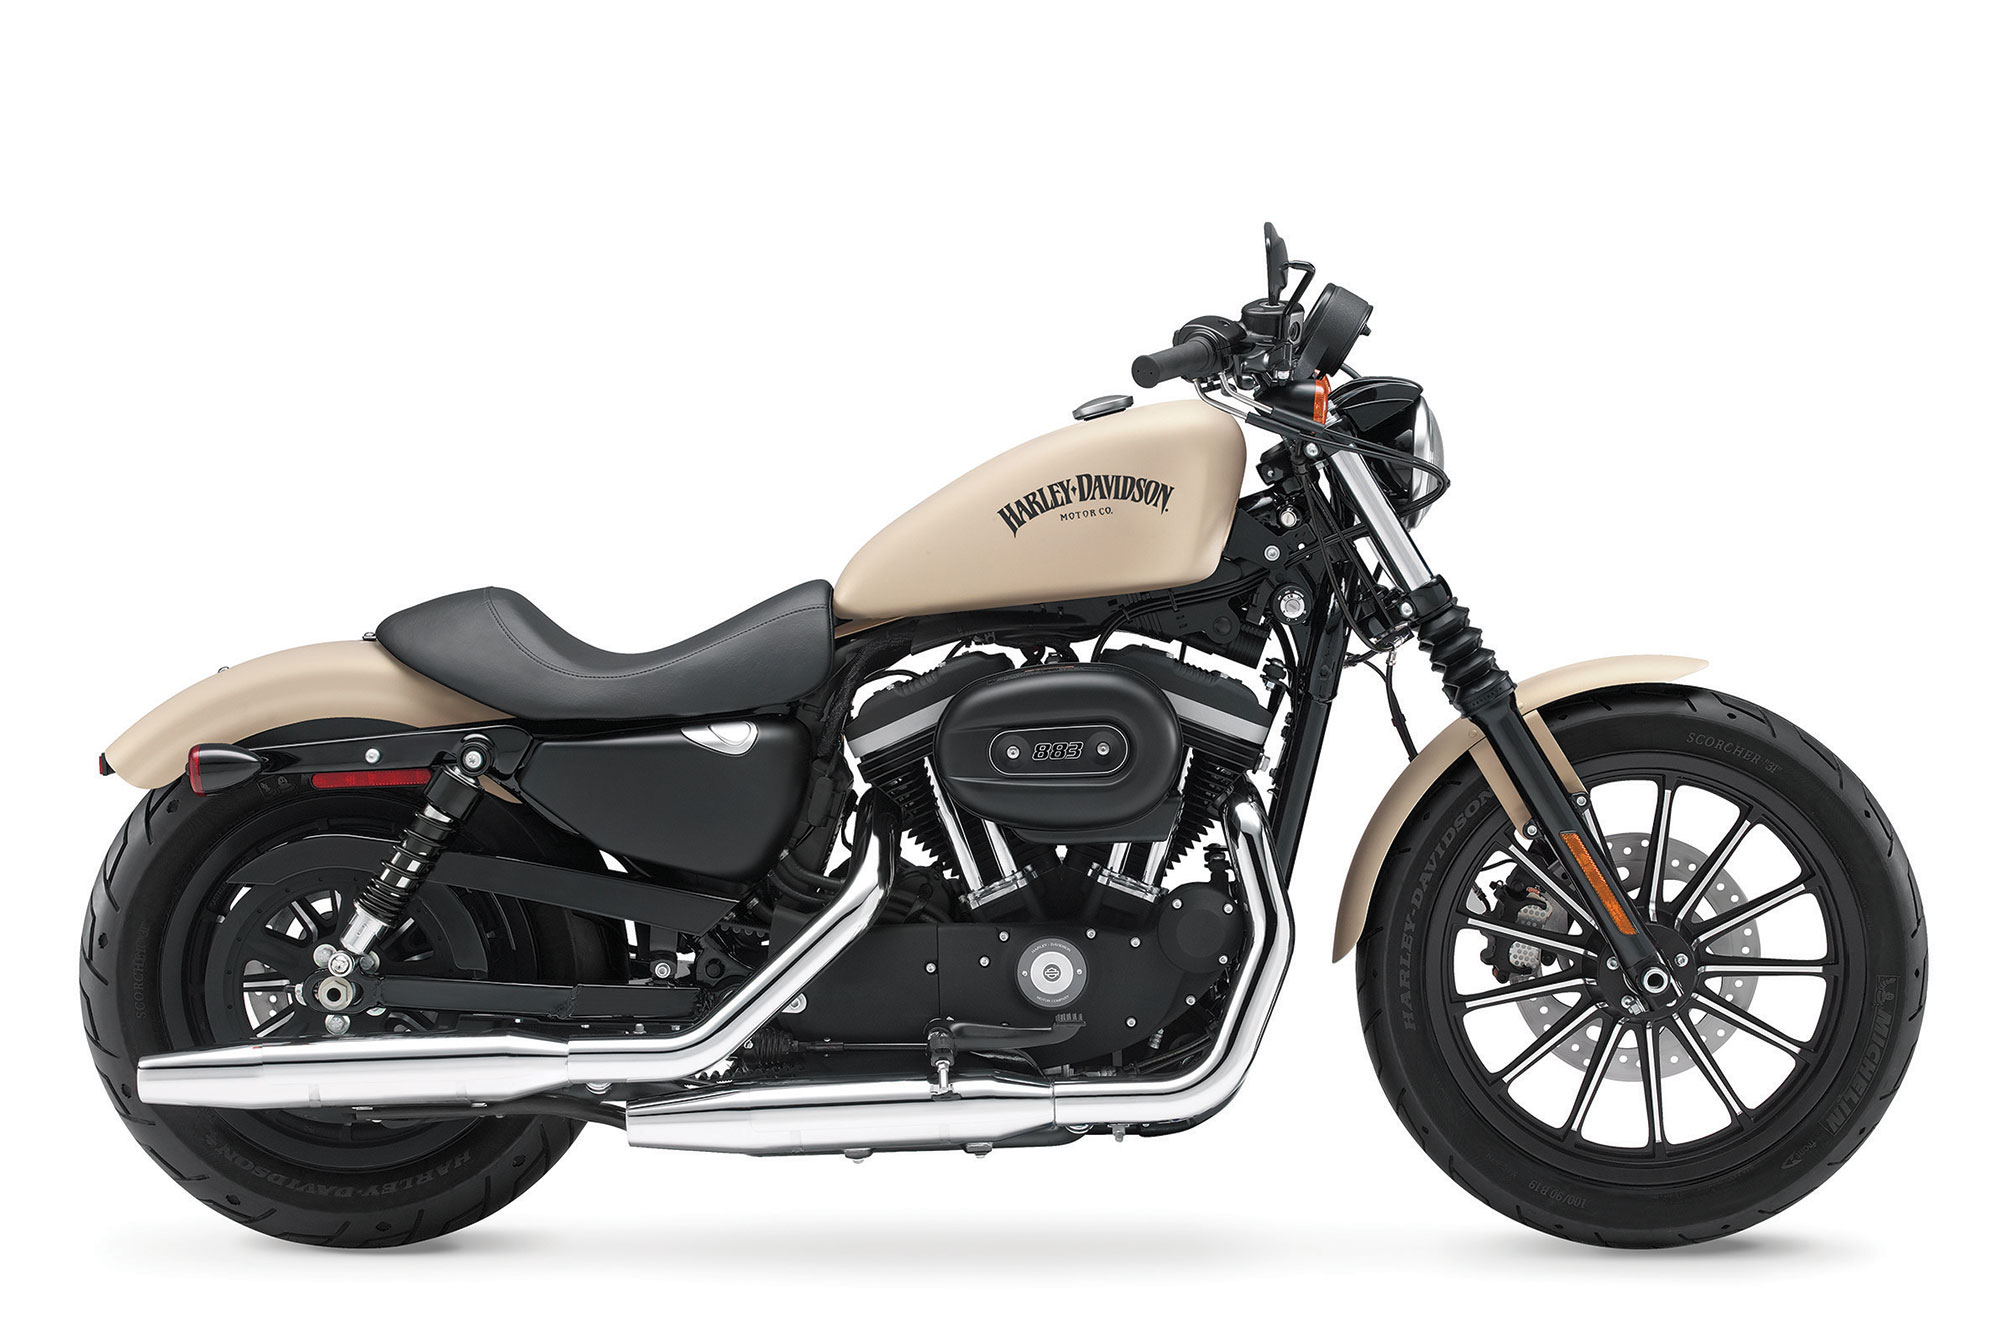 2015 Harley Davidson Xl883n Iron 883 Review